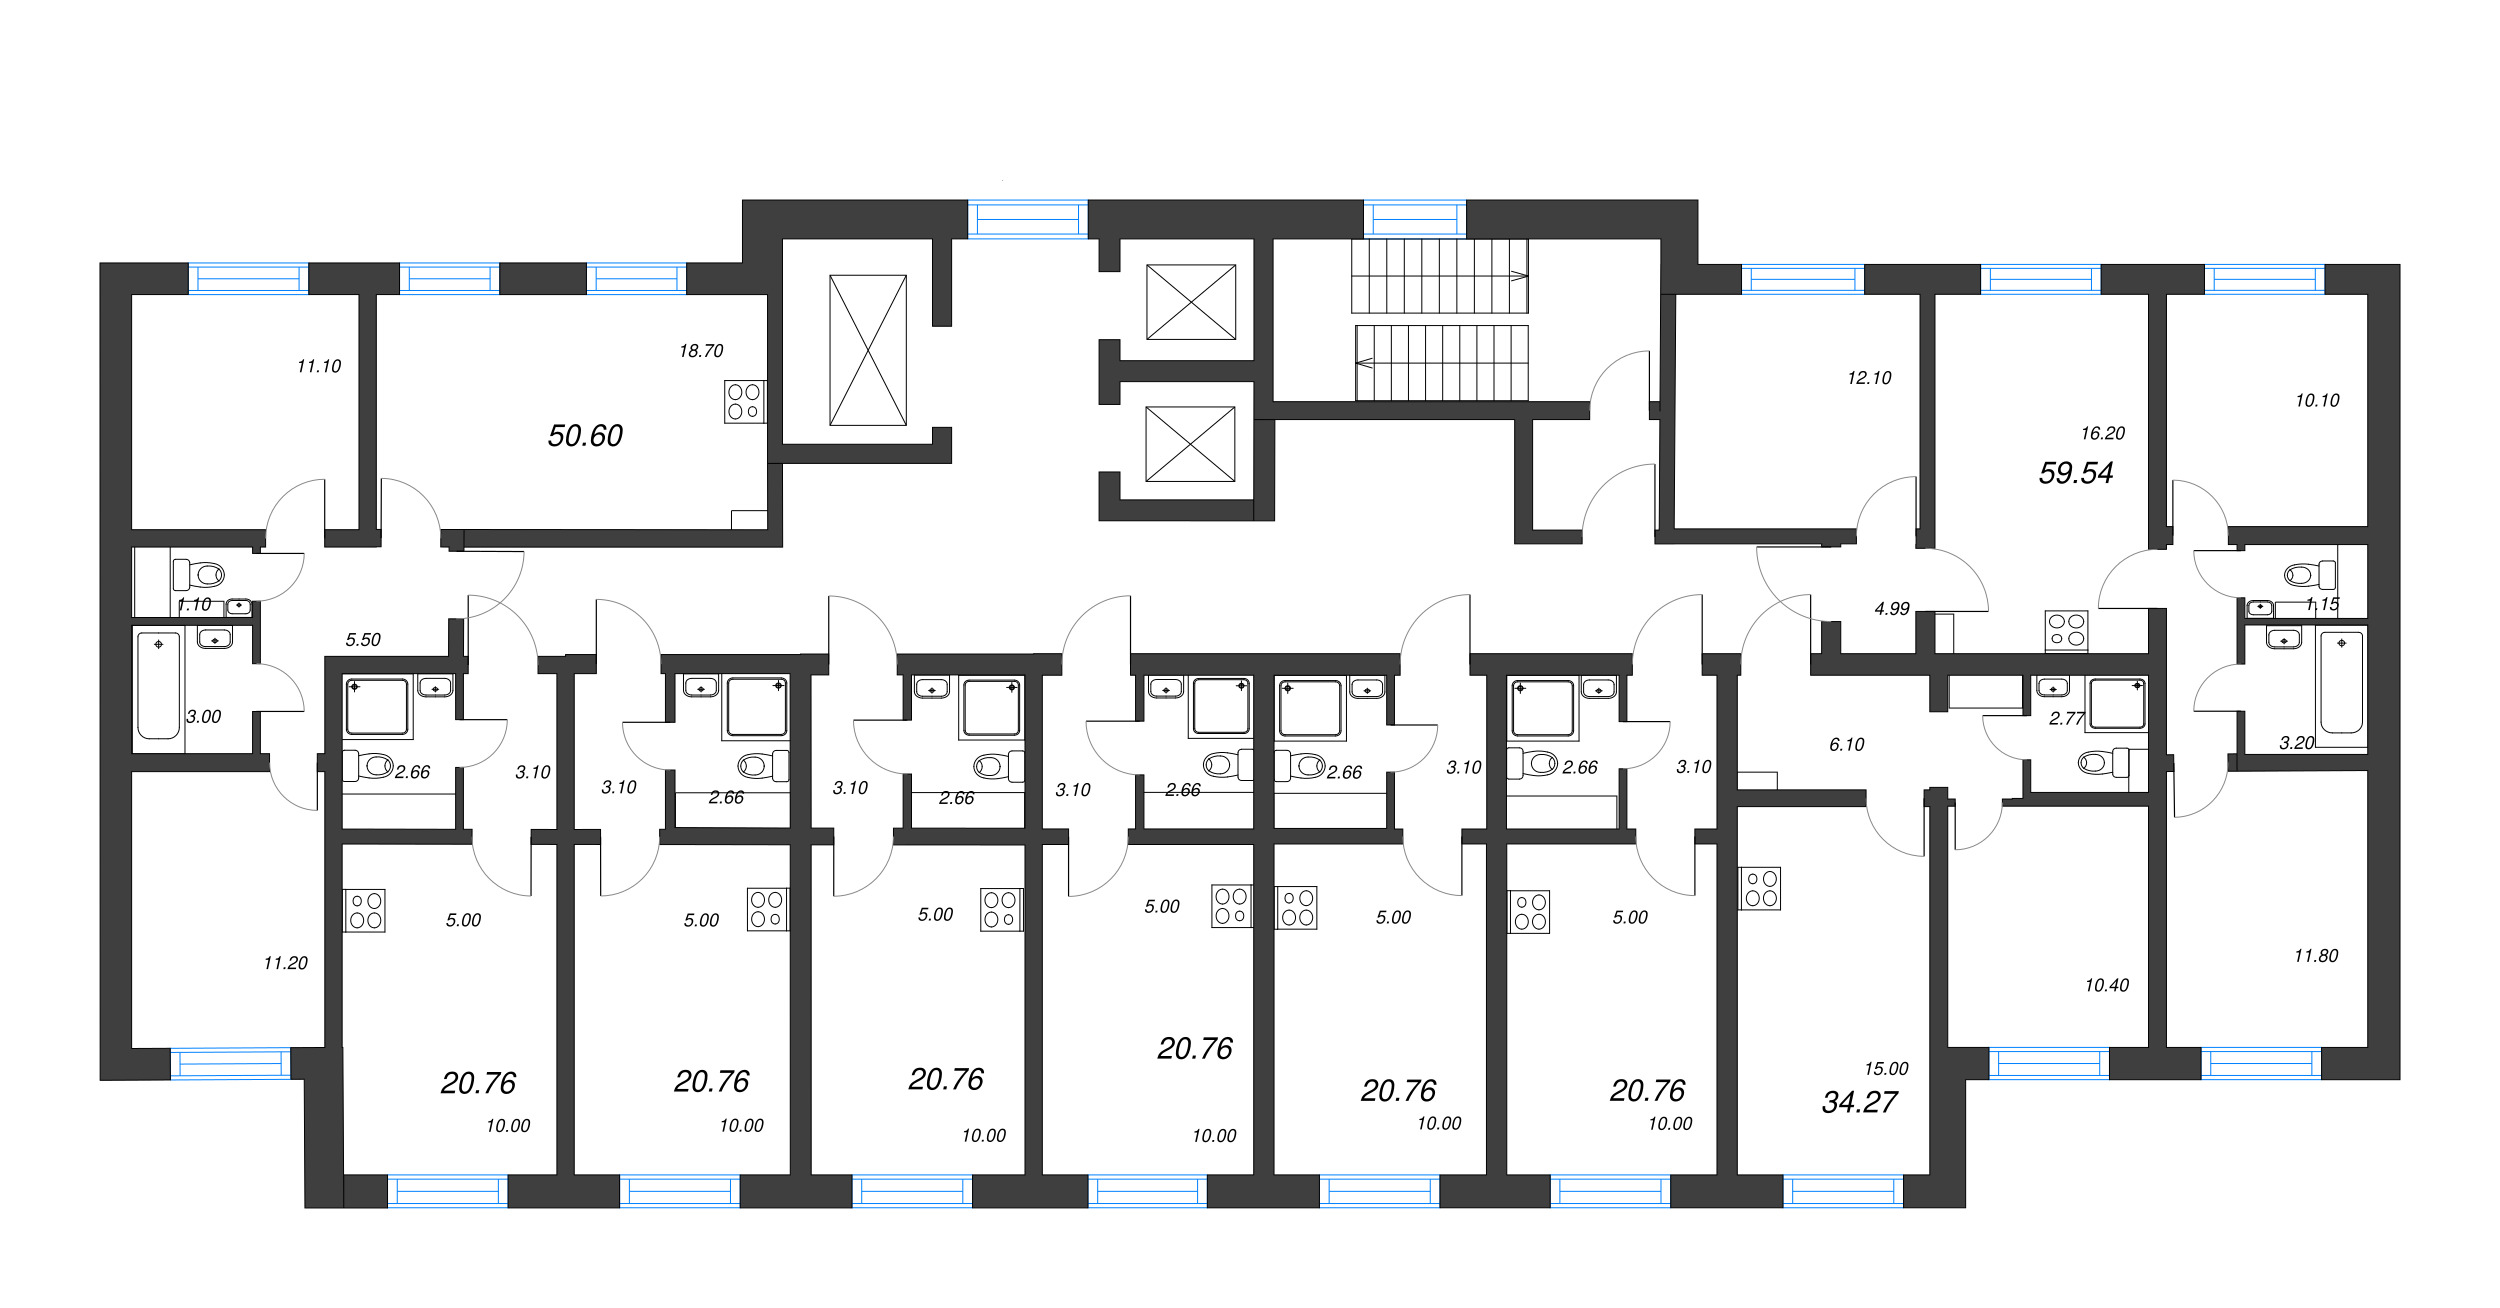 4-комнатная (Евро) квартира, 59.54 м² - планировка этажа